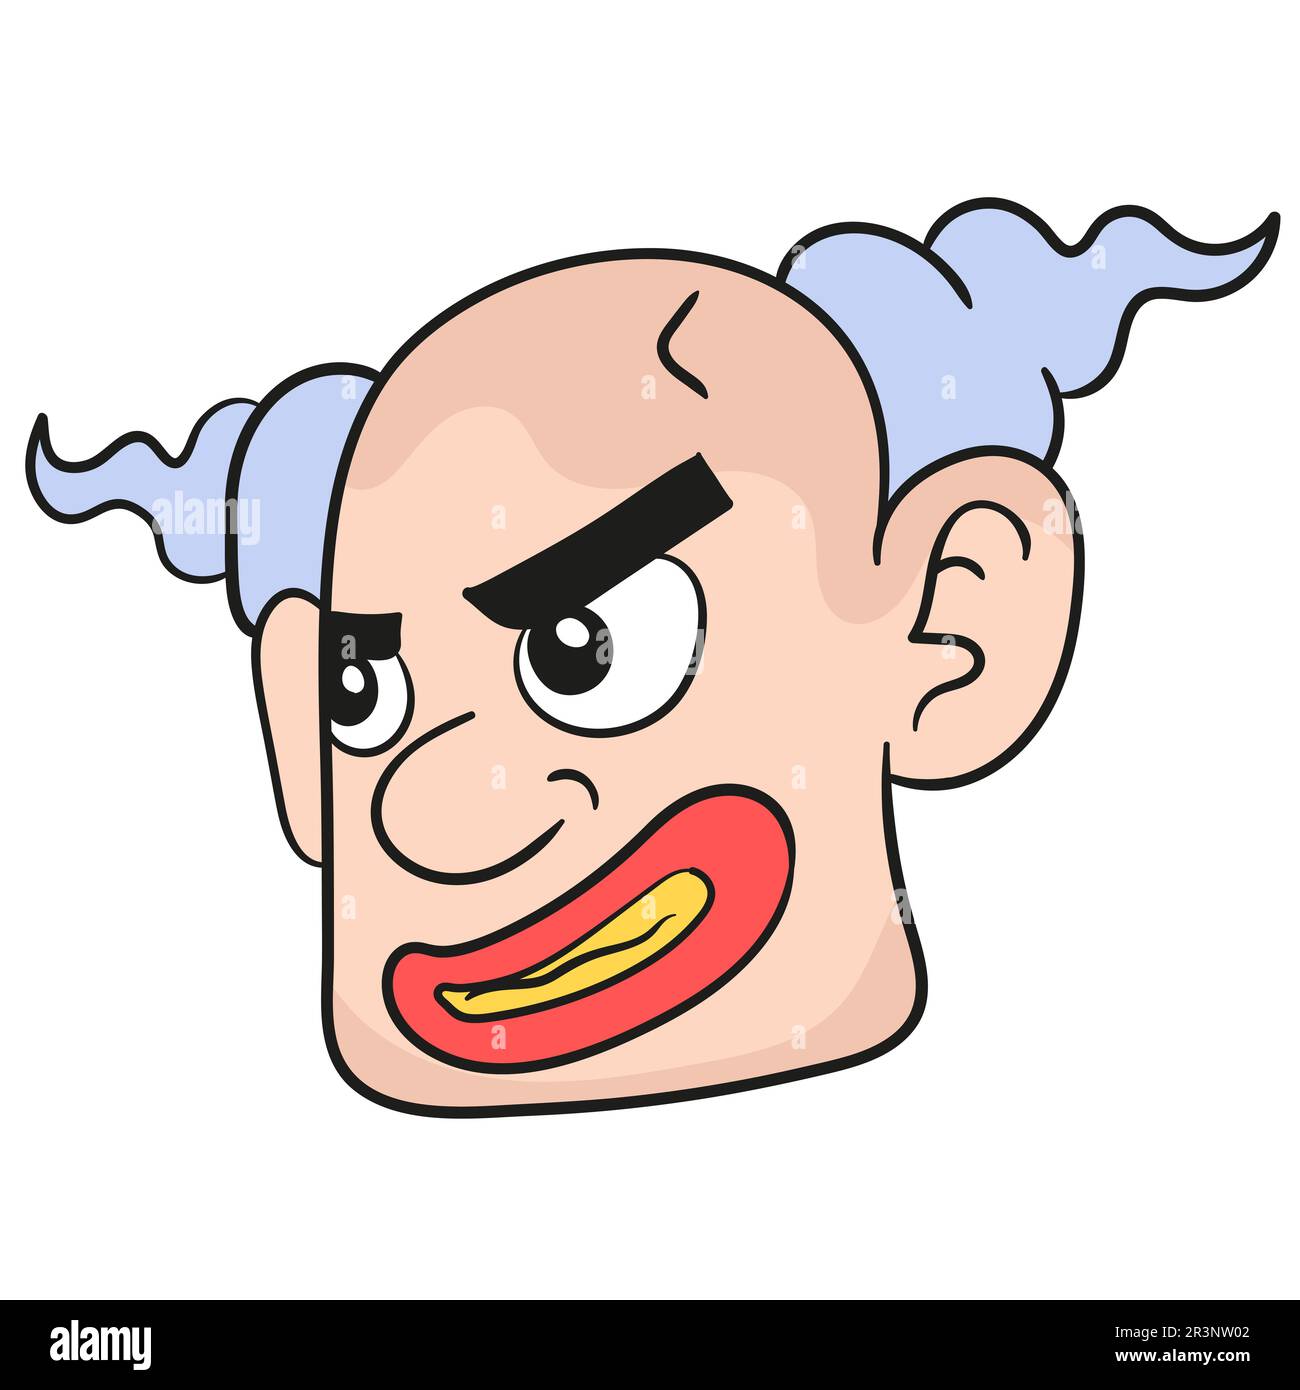 Evil clown emoticon head. doodle icon image Stock Photo